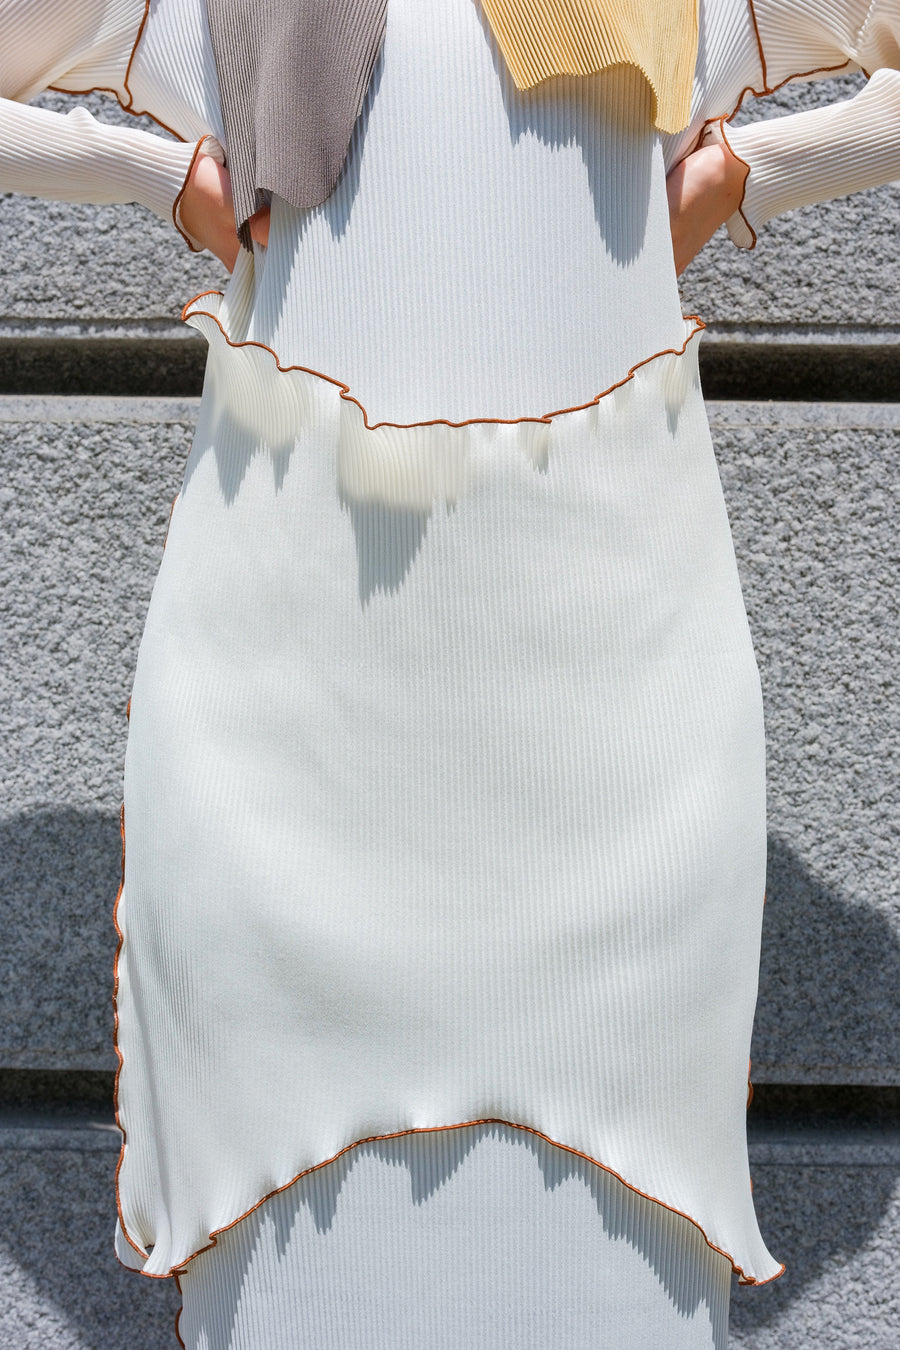 KOTOHAYOKOZAWA's Long Sleeve DRESS HIGH NECK TYPE WHITE mail order